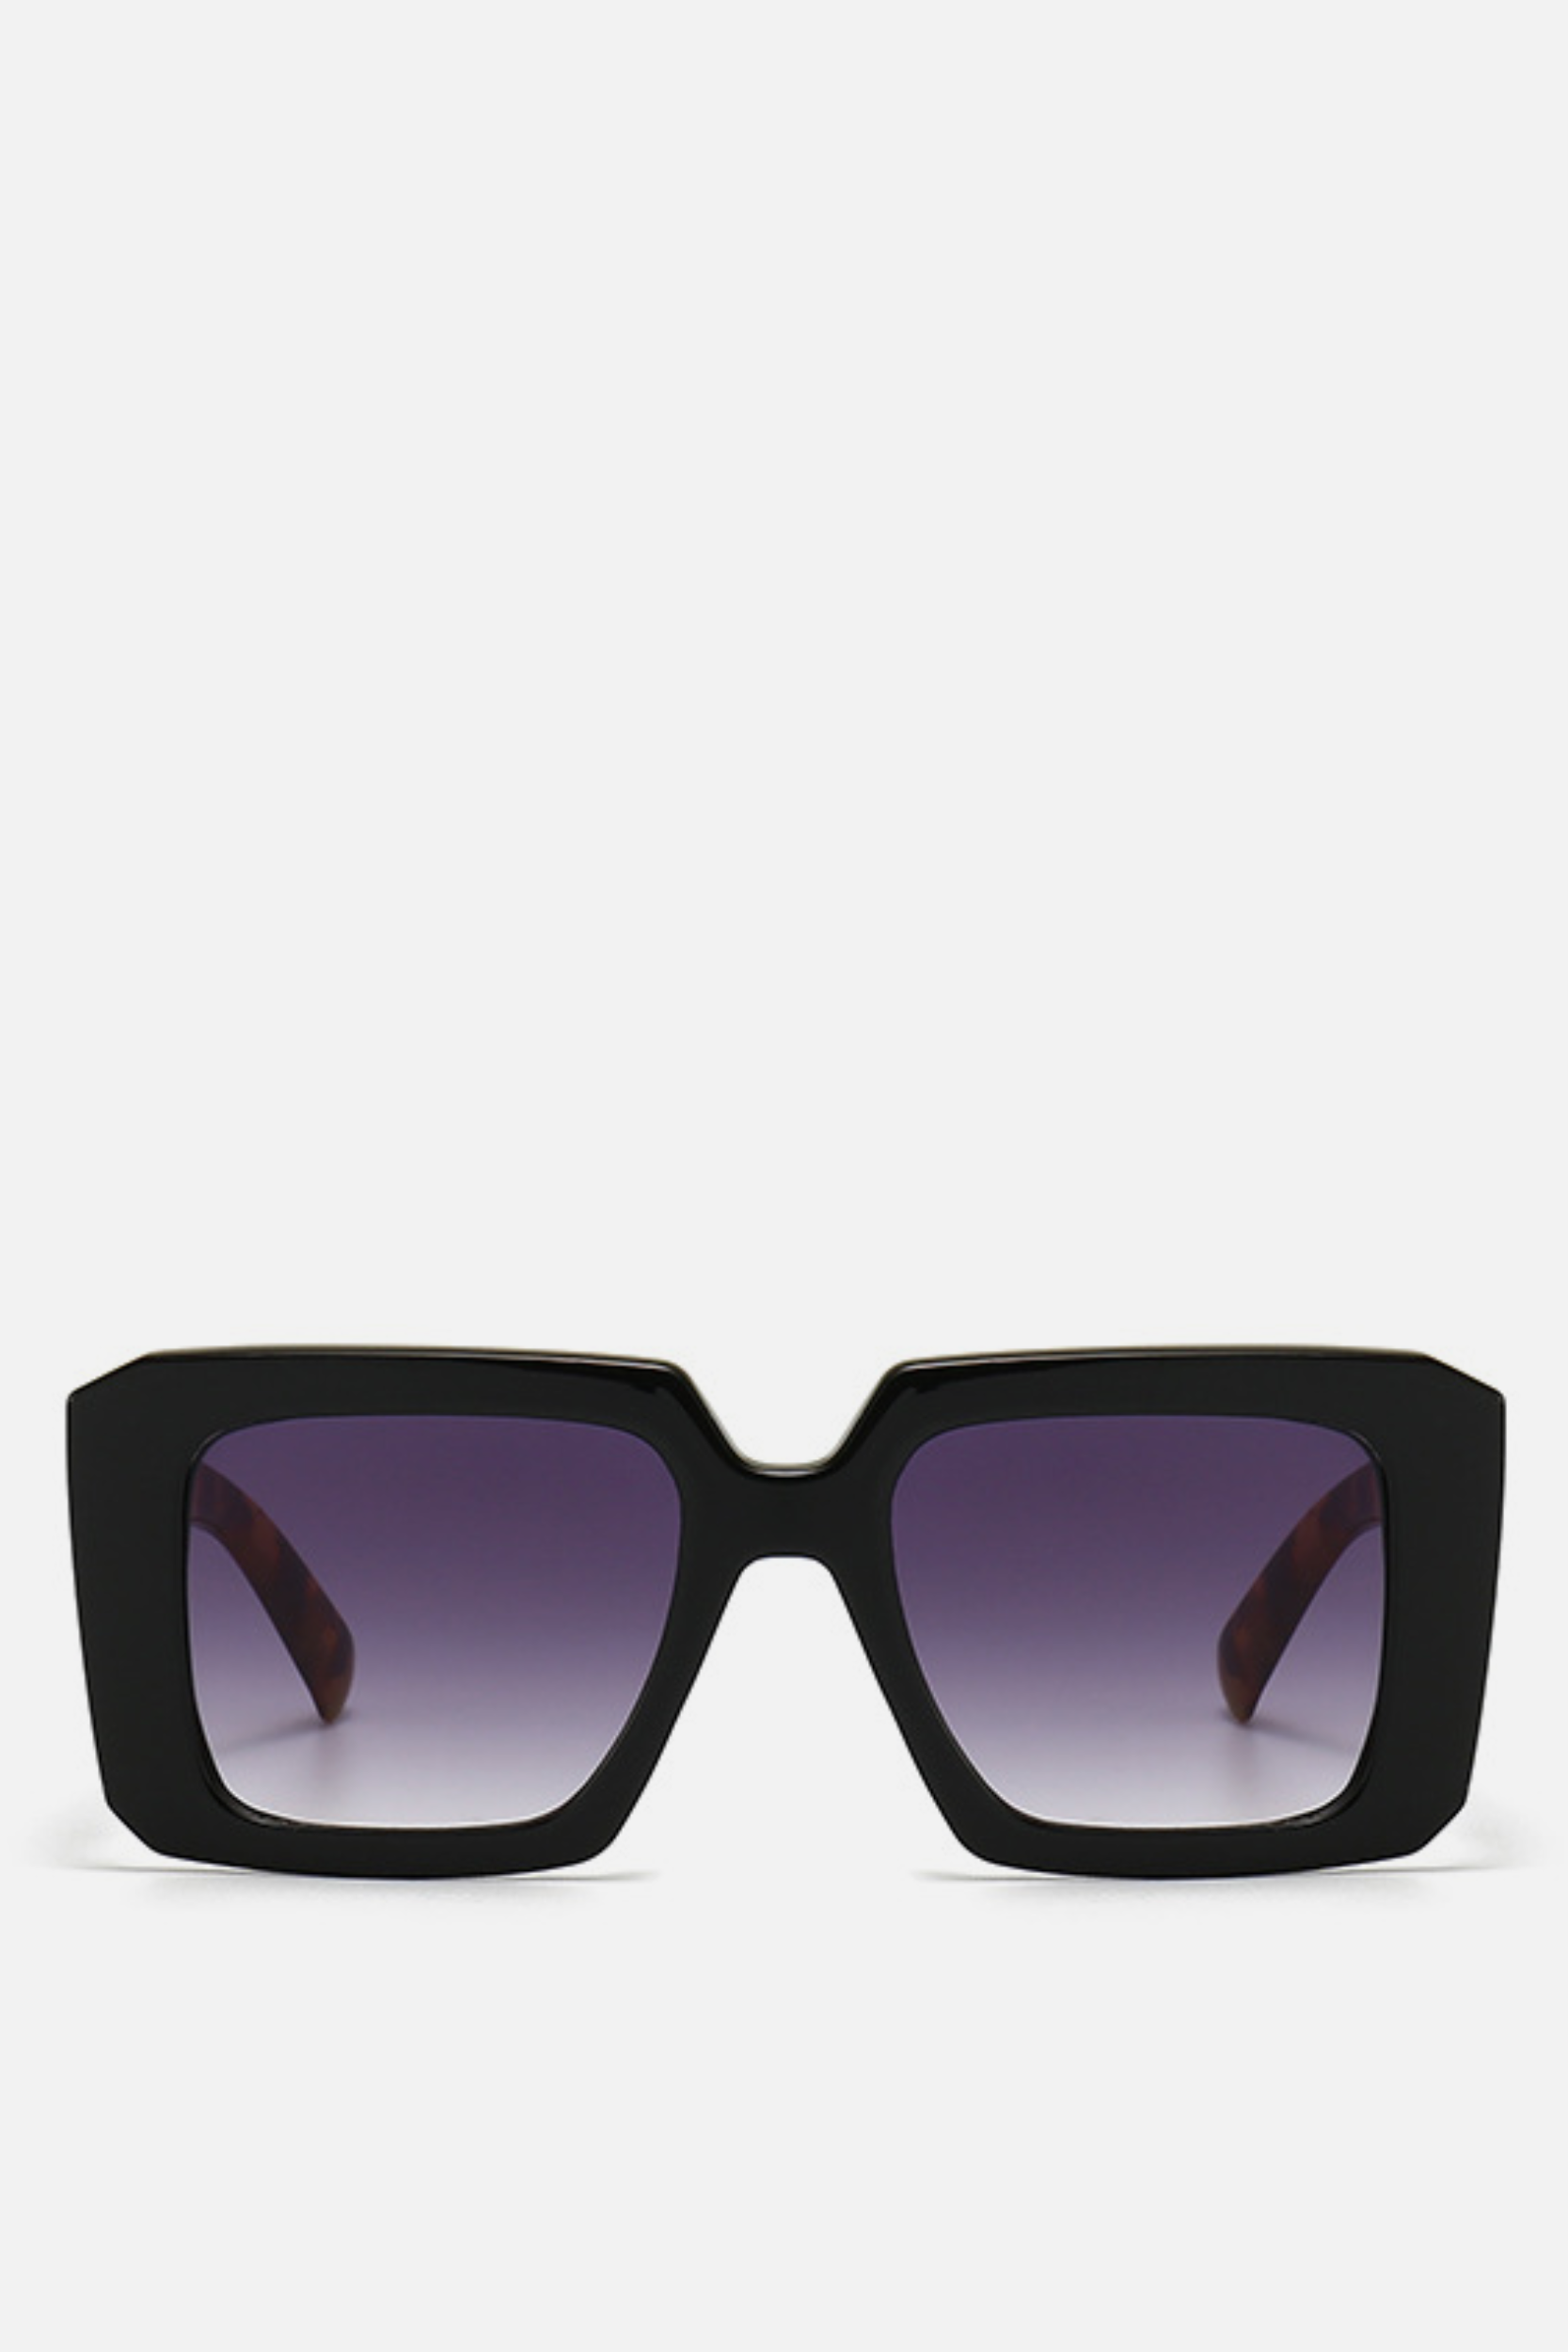 PERU Black Two Tone Square Sunglasses